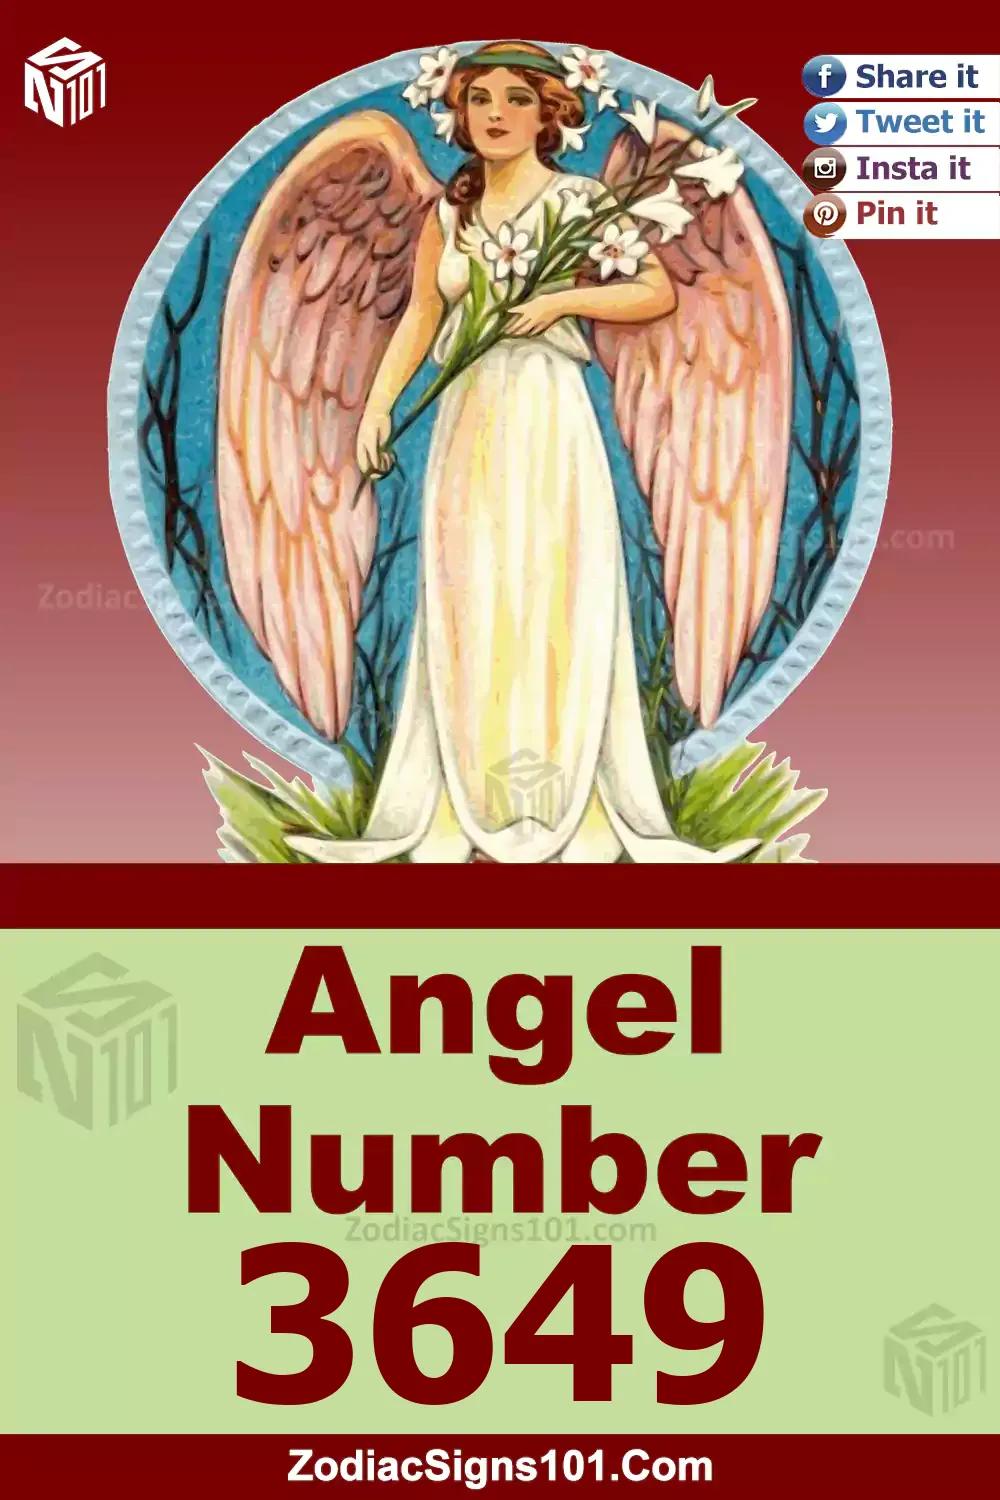 3649-Angel-Number-Meaning.jpg